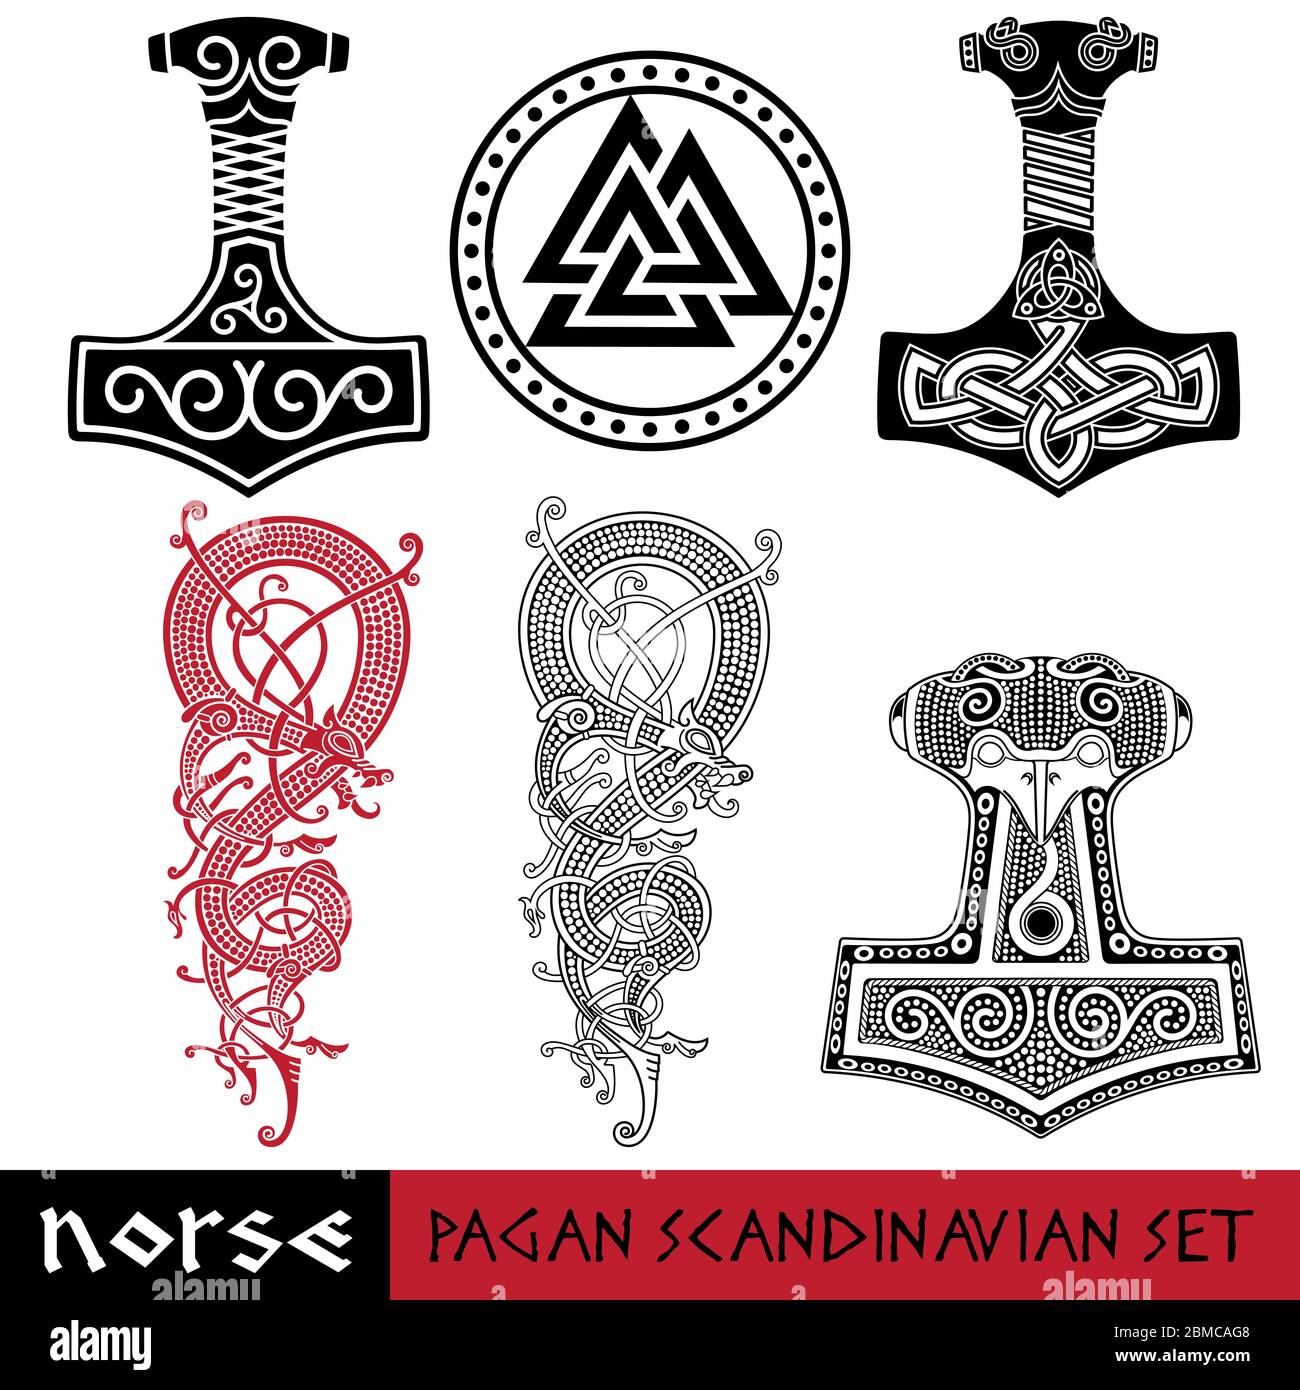 The Gungnir Tattoo: A Symbol Of Norse Precision